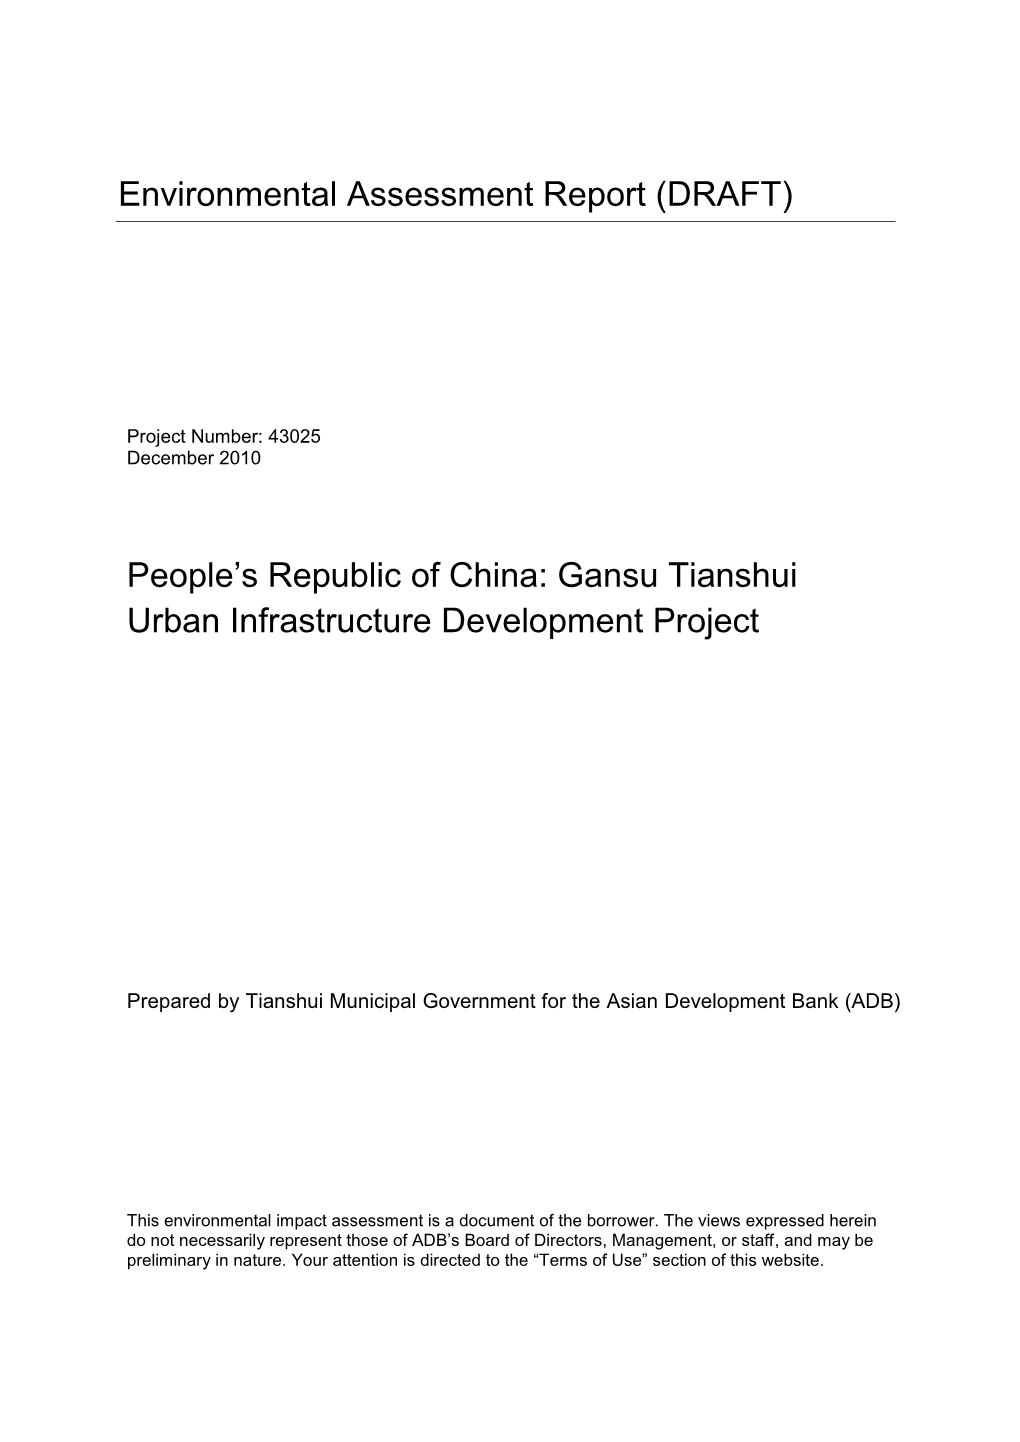 Environmental Assessment Report (DRAFT) People's Republic Of